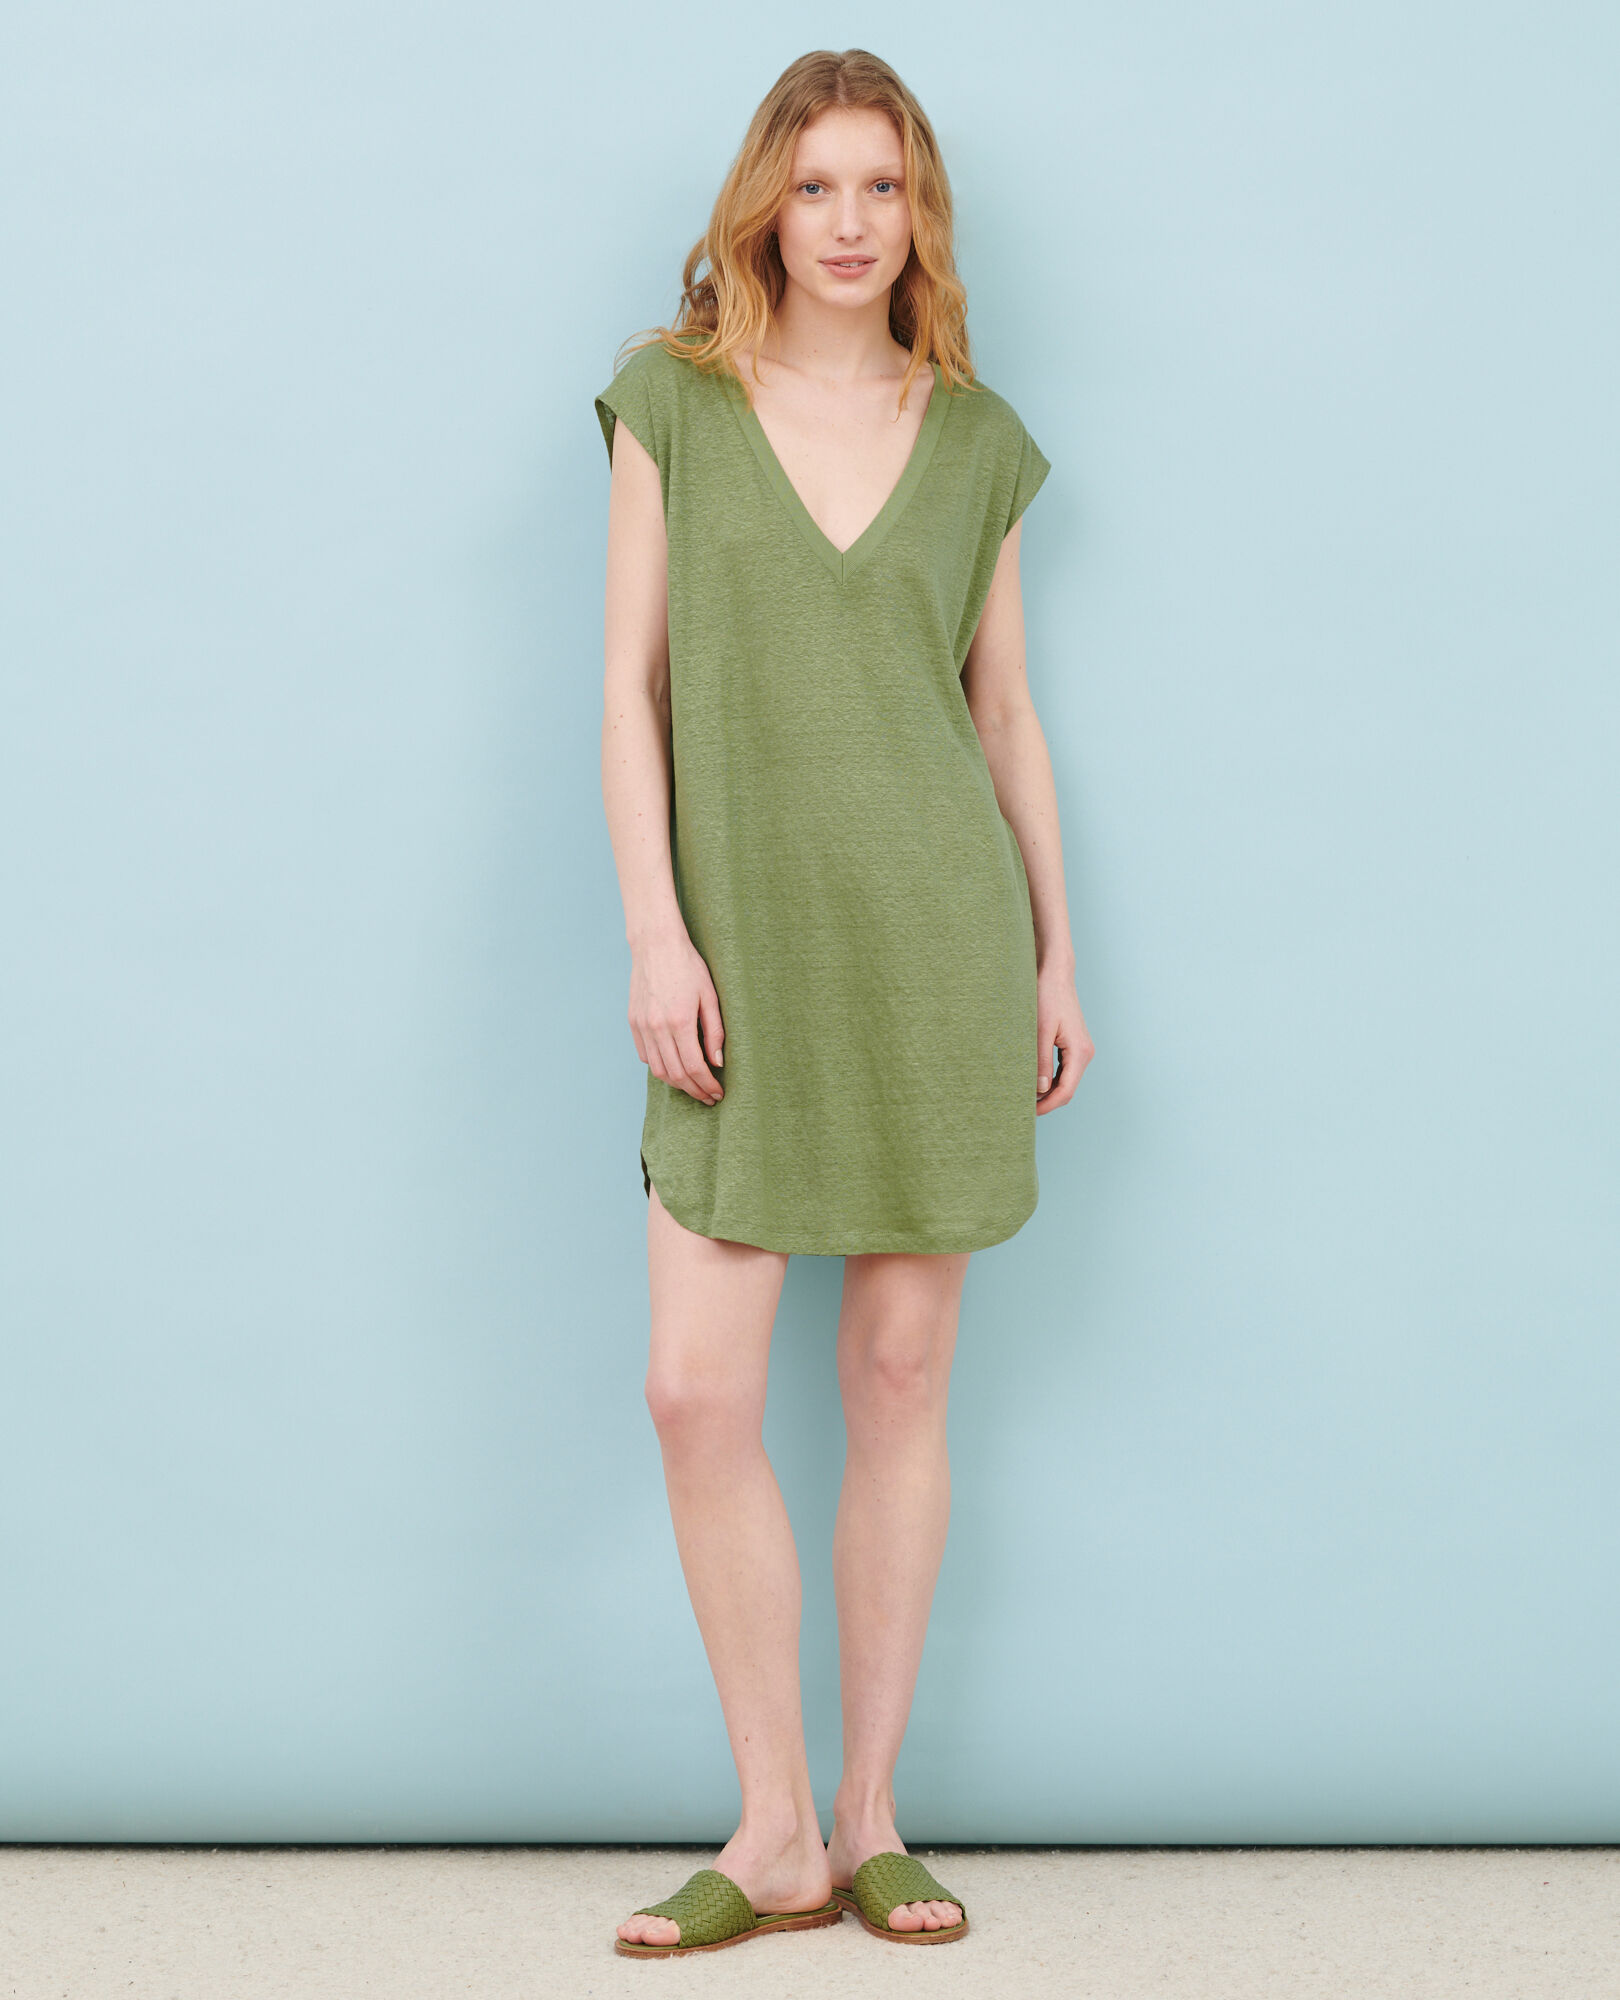 Kurzes Kleid aus Leinen 52 green 2sdj350f05